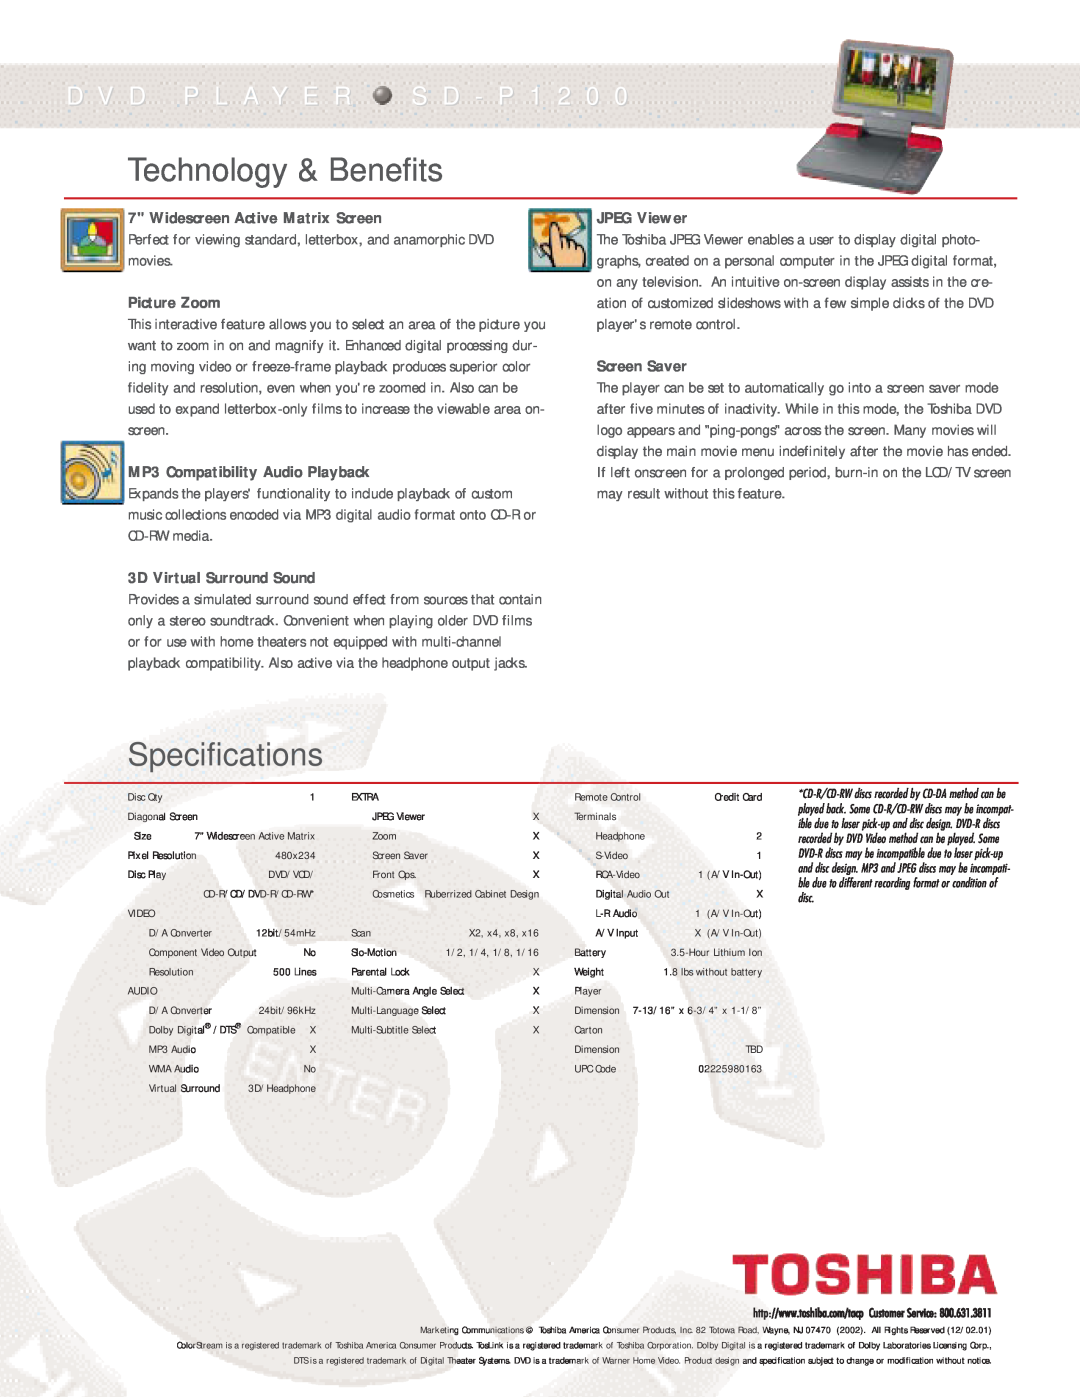 Toshiba SD-P1200 Technology & Benefits, Specifications, D V D P L A Y E R S D - P 1 2 0, Widescreen Active Matrix Screen 